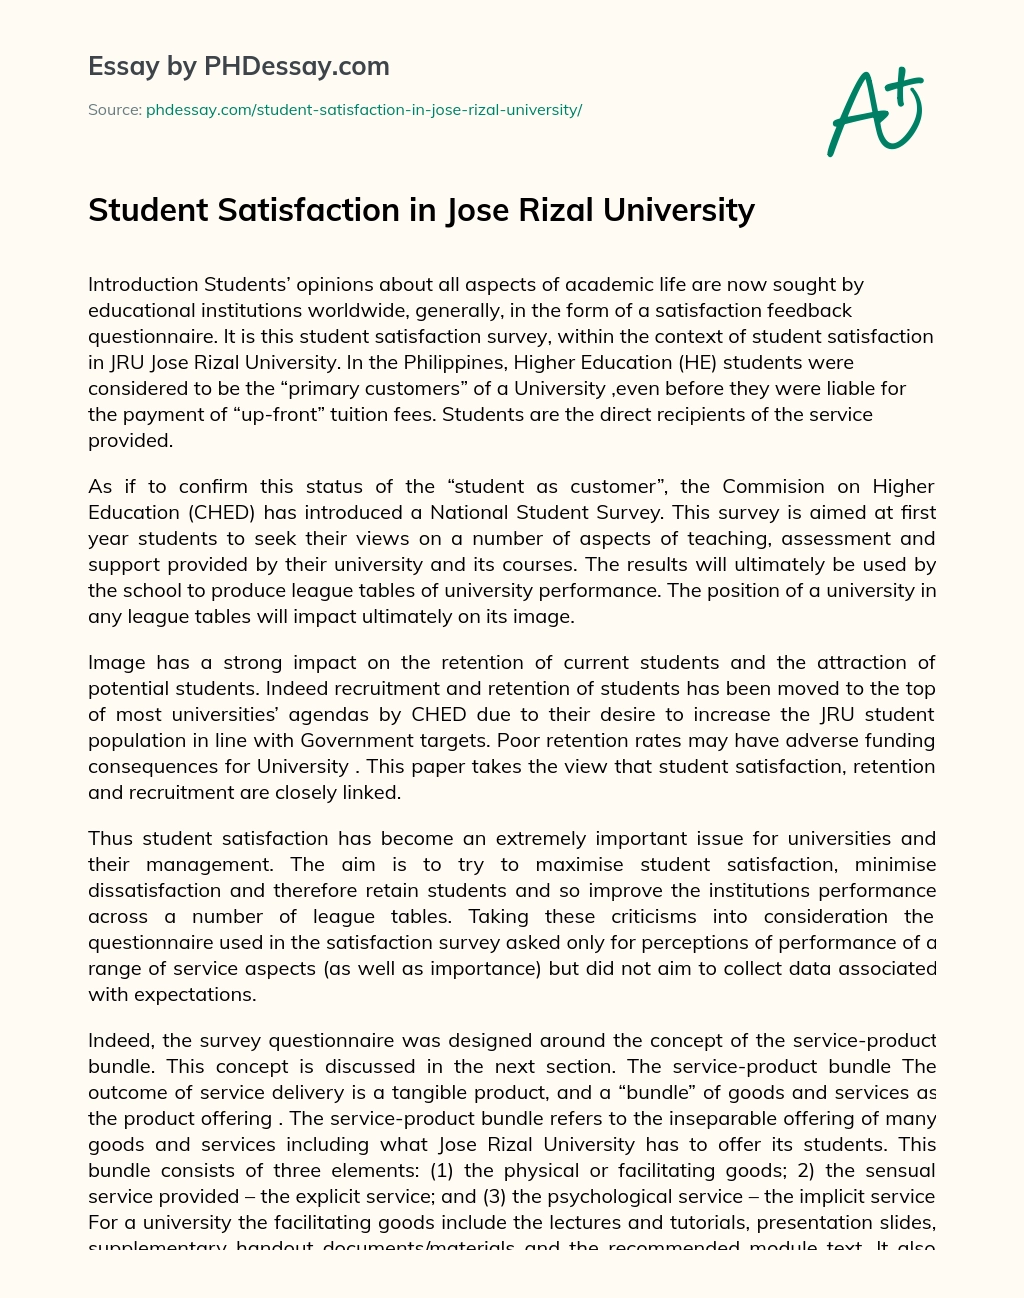 Student Satisfaction in Jose Rizal University essay